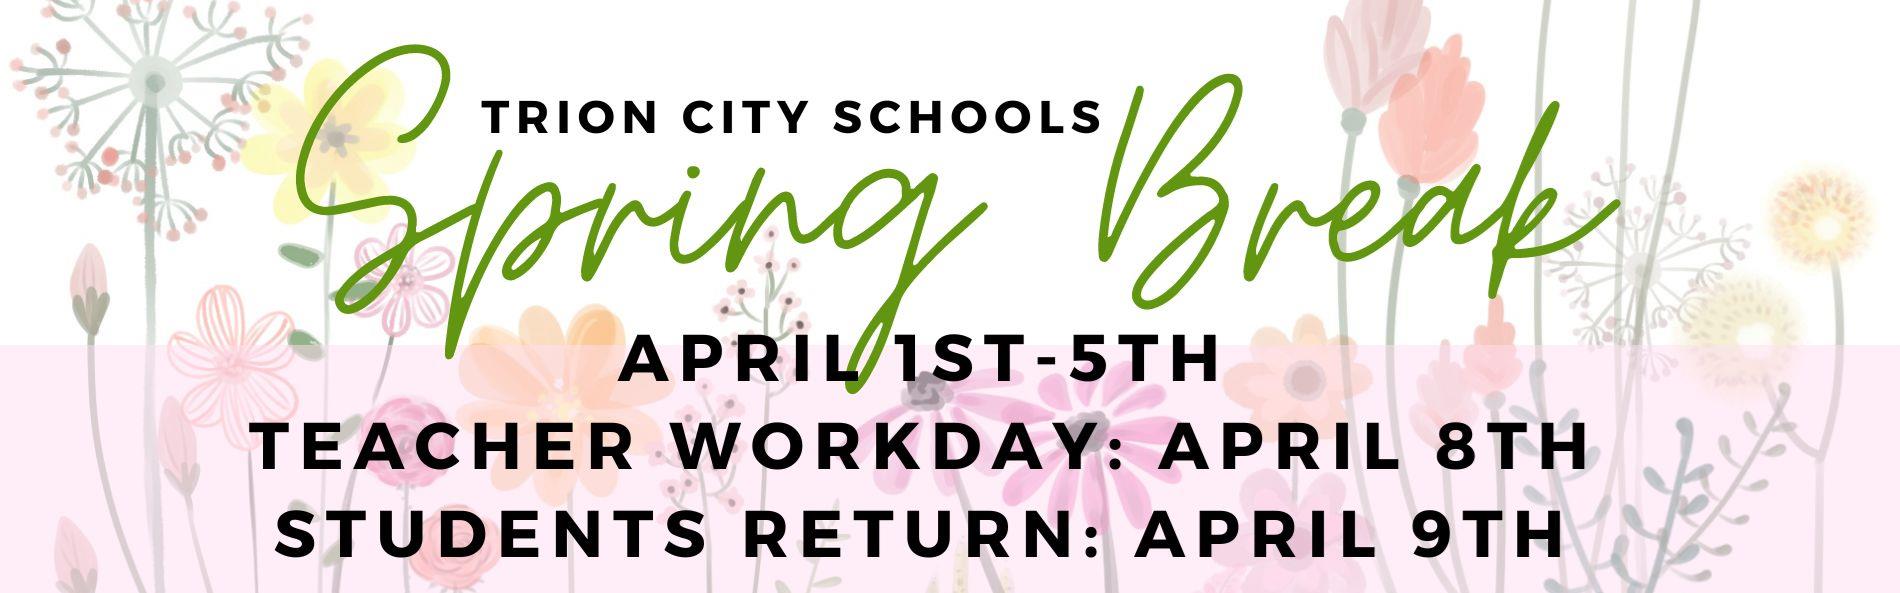 SPRING BREAK FOR TCS APRIL 1-5; TEACHER WORK DAY APRIL 8TH; STUDENTS RETURN APRIL 9TH